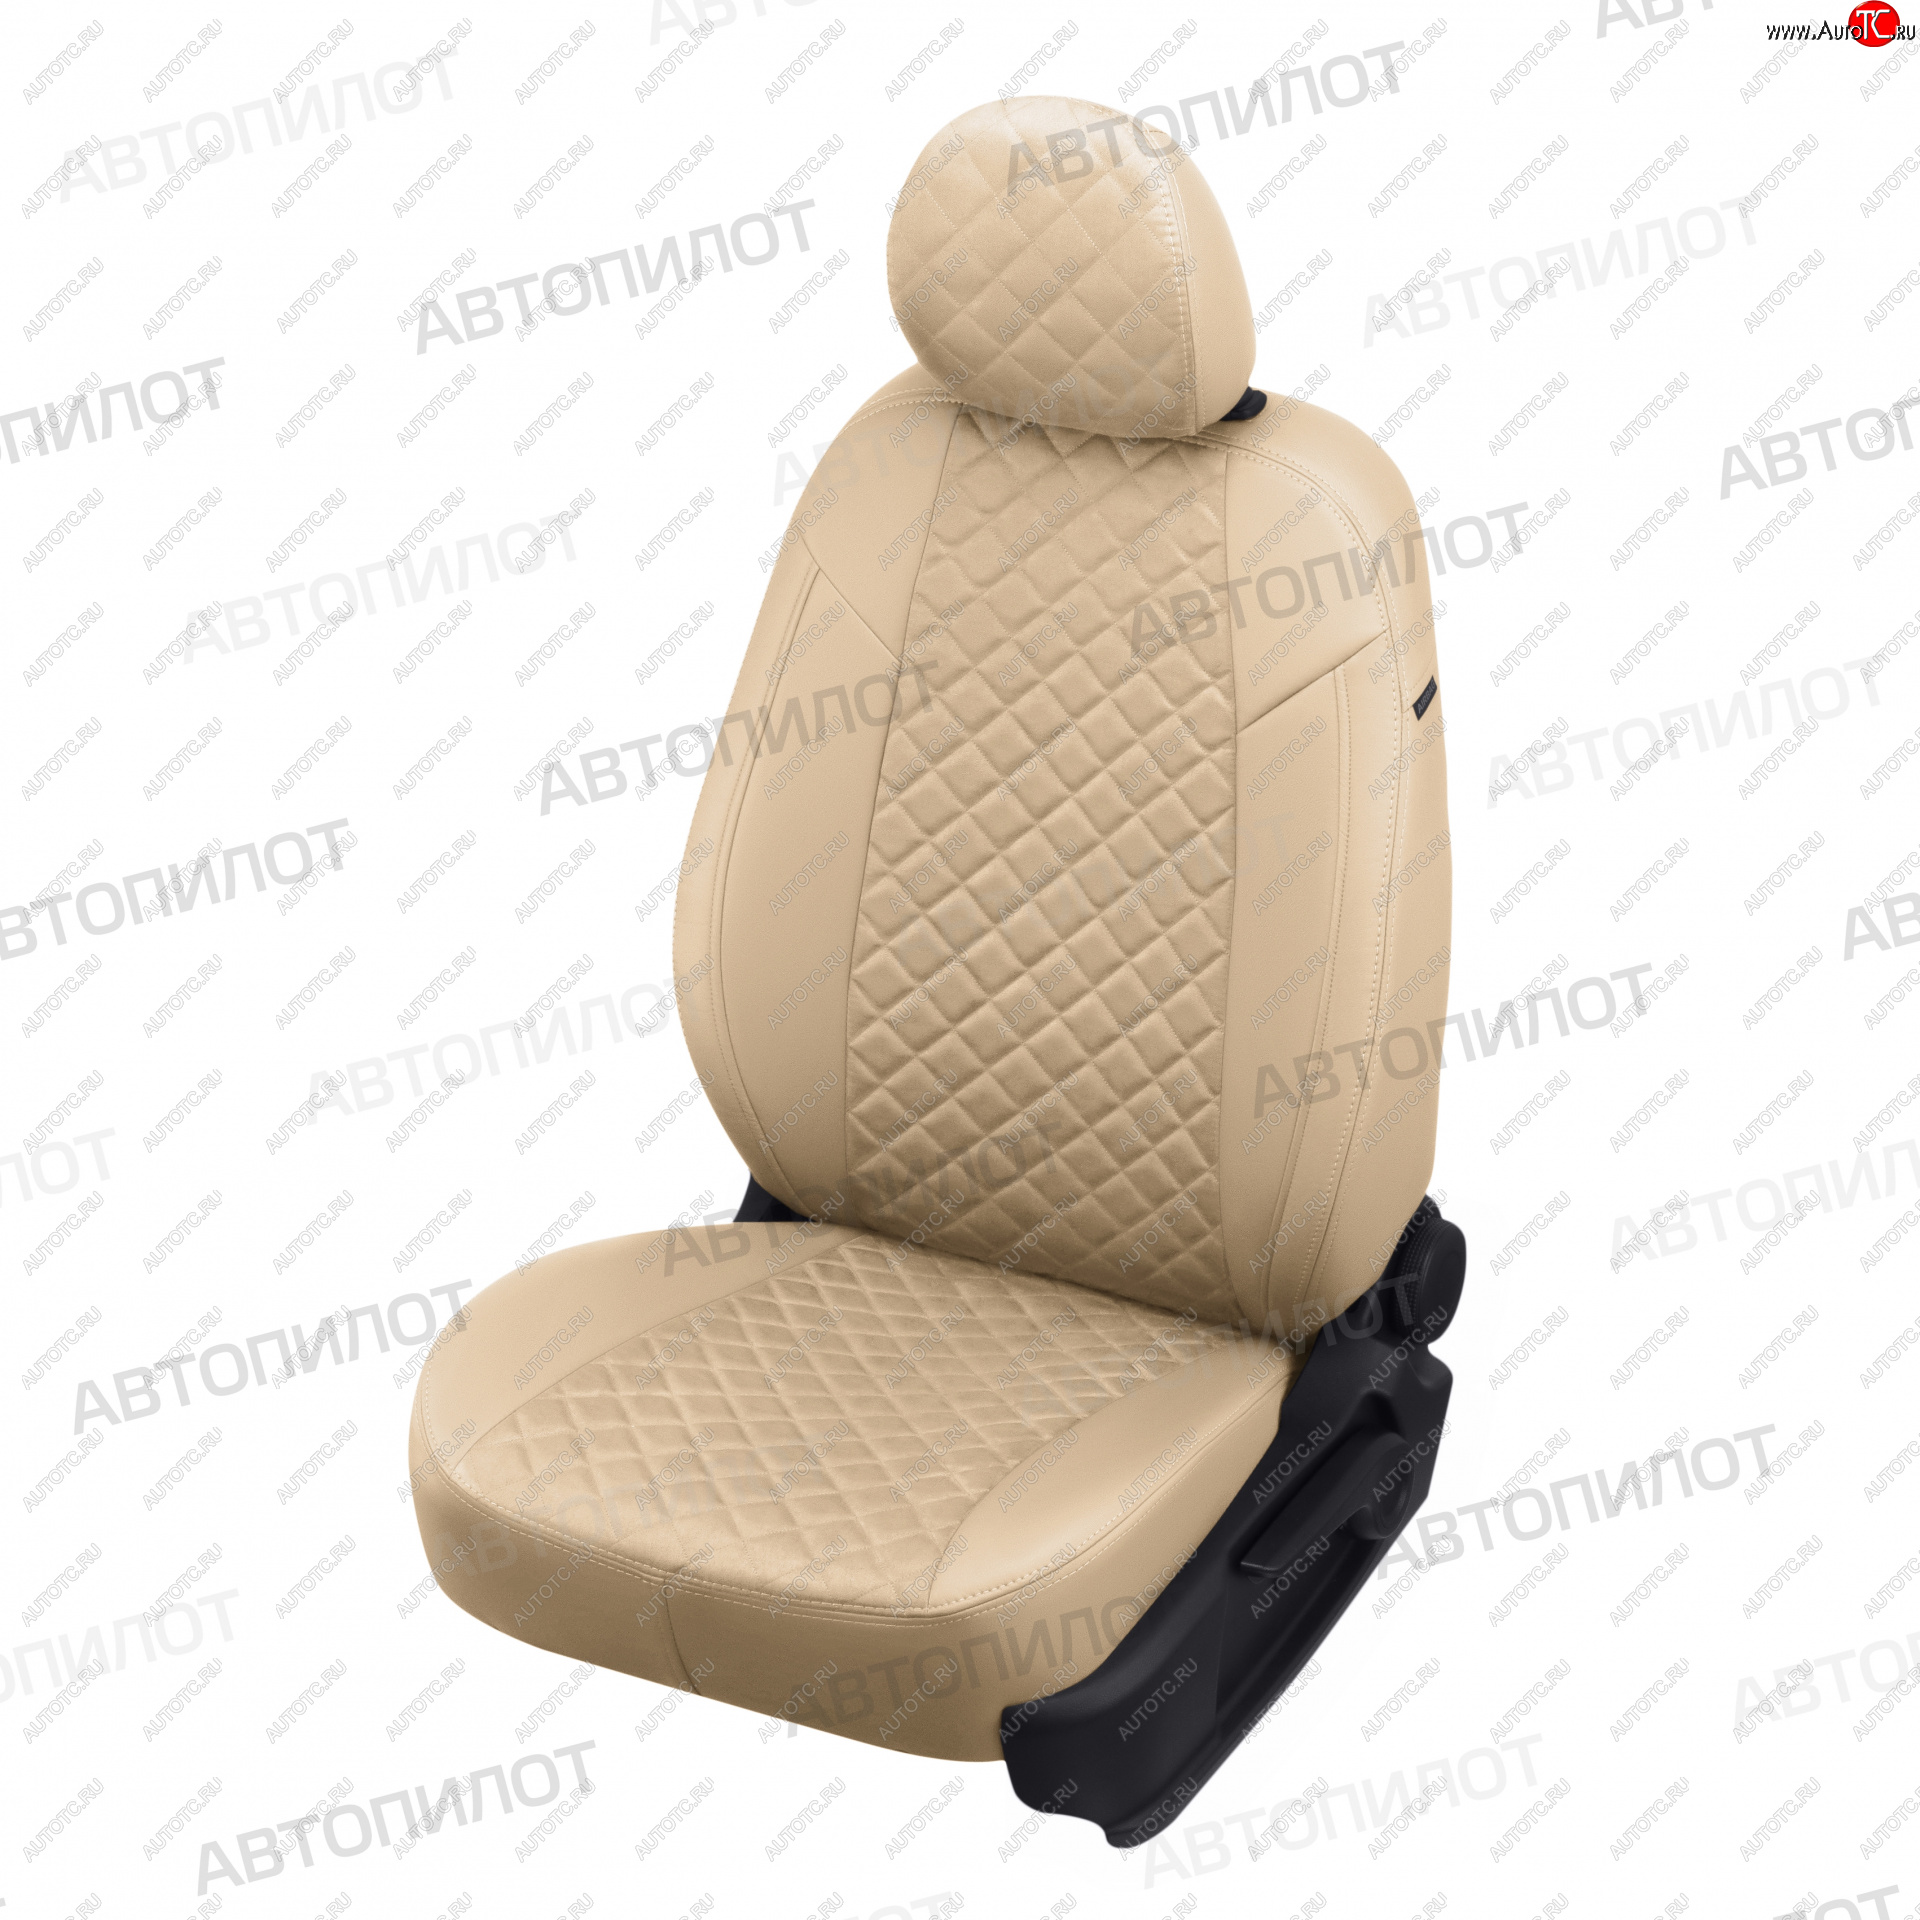 13 999 р. Чехлы сидений (экокожа/алькантара) Автопилот Ромб  Ford Ka  1 (1996-2008) (бежевый)